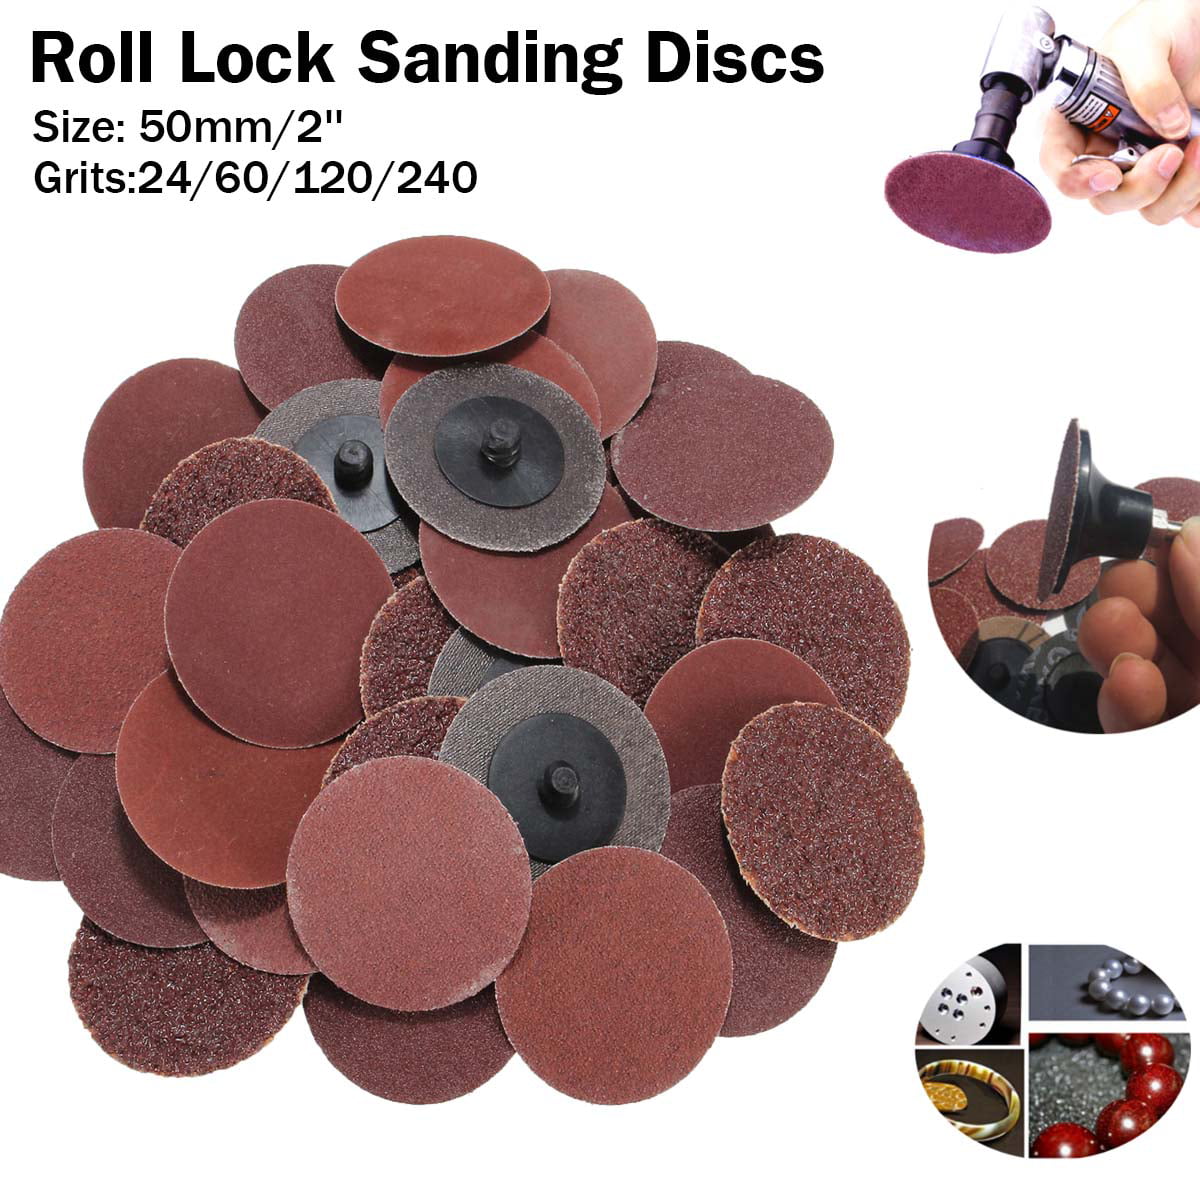 40x 50mm 2'' 40/80/120/240 Grit Type R Roloc Sanding Discs Abrasive Roll Lock 